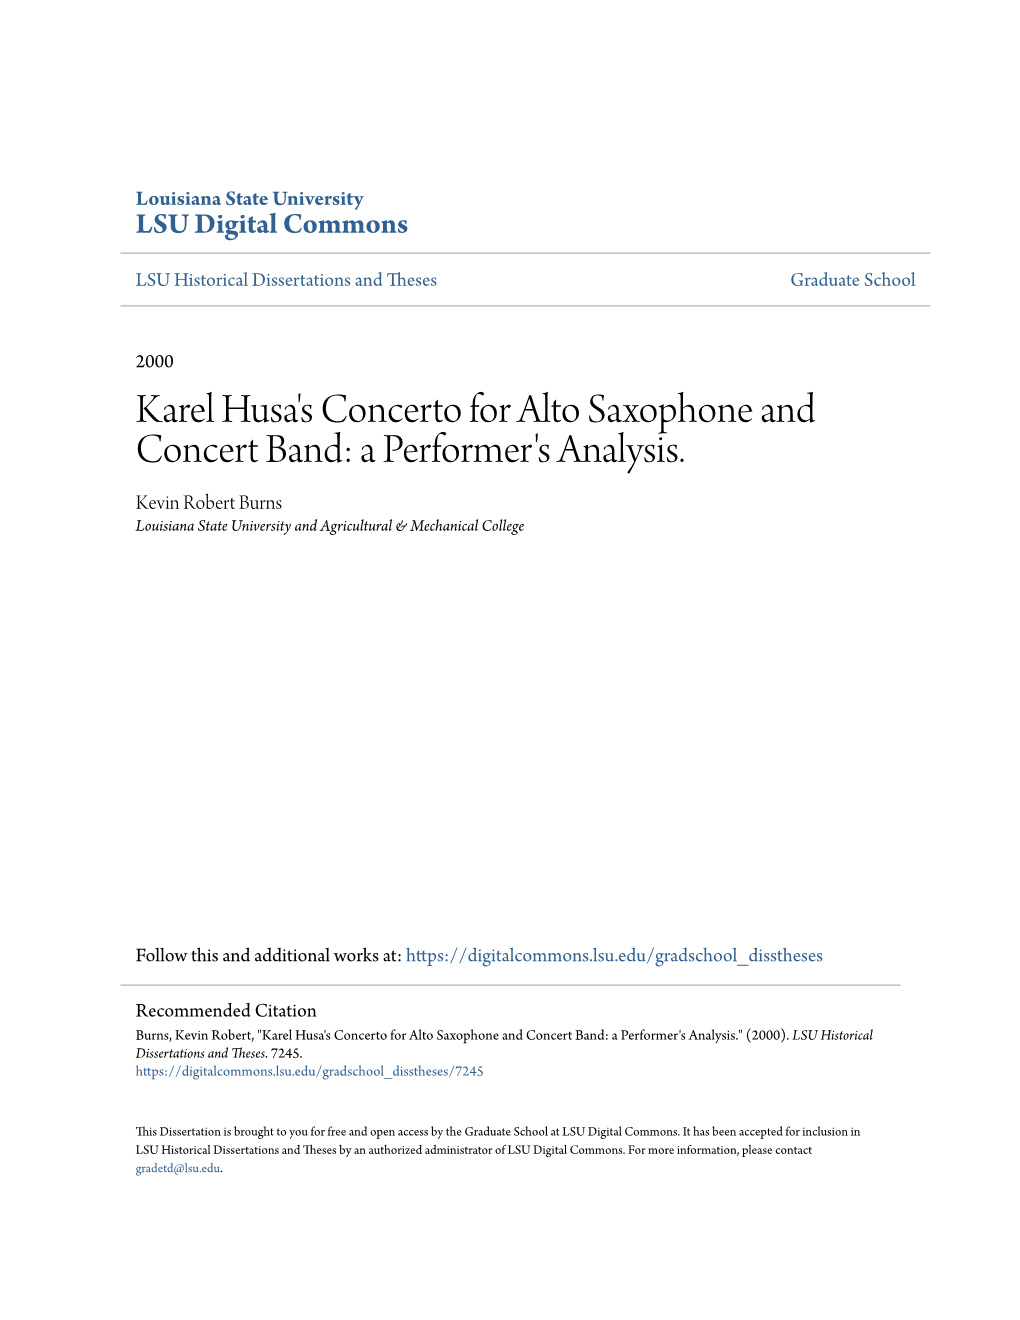 Karel Husa's Concerto for Alto Saxophone and Concert Band: a Performer's Analysis